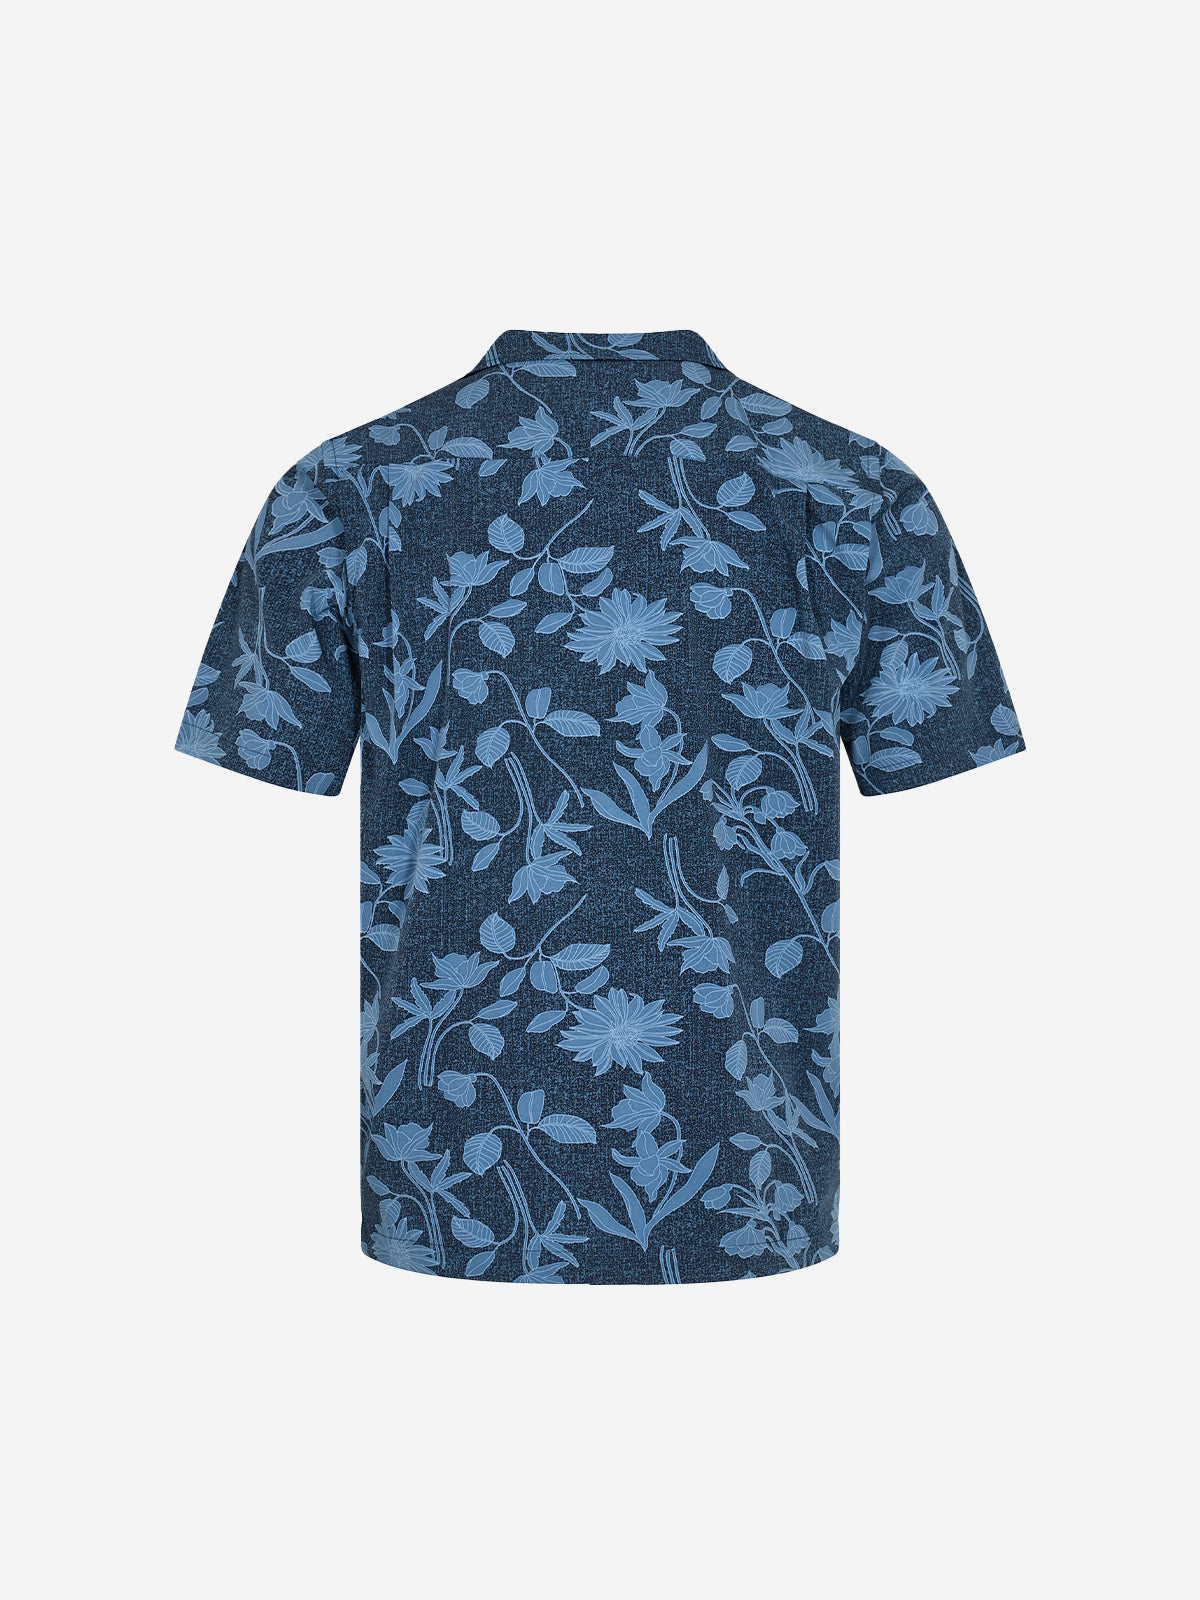 Joe Flower SS Shirt - Blue Flower - Mos Mosh Gallery - Kul og Koks